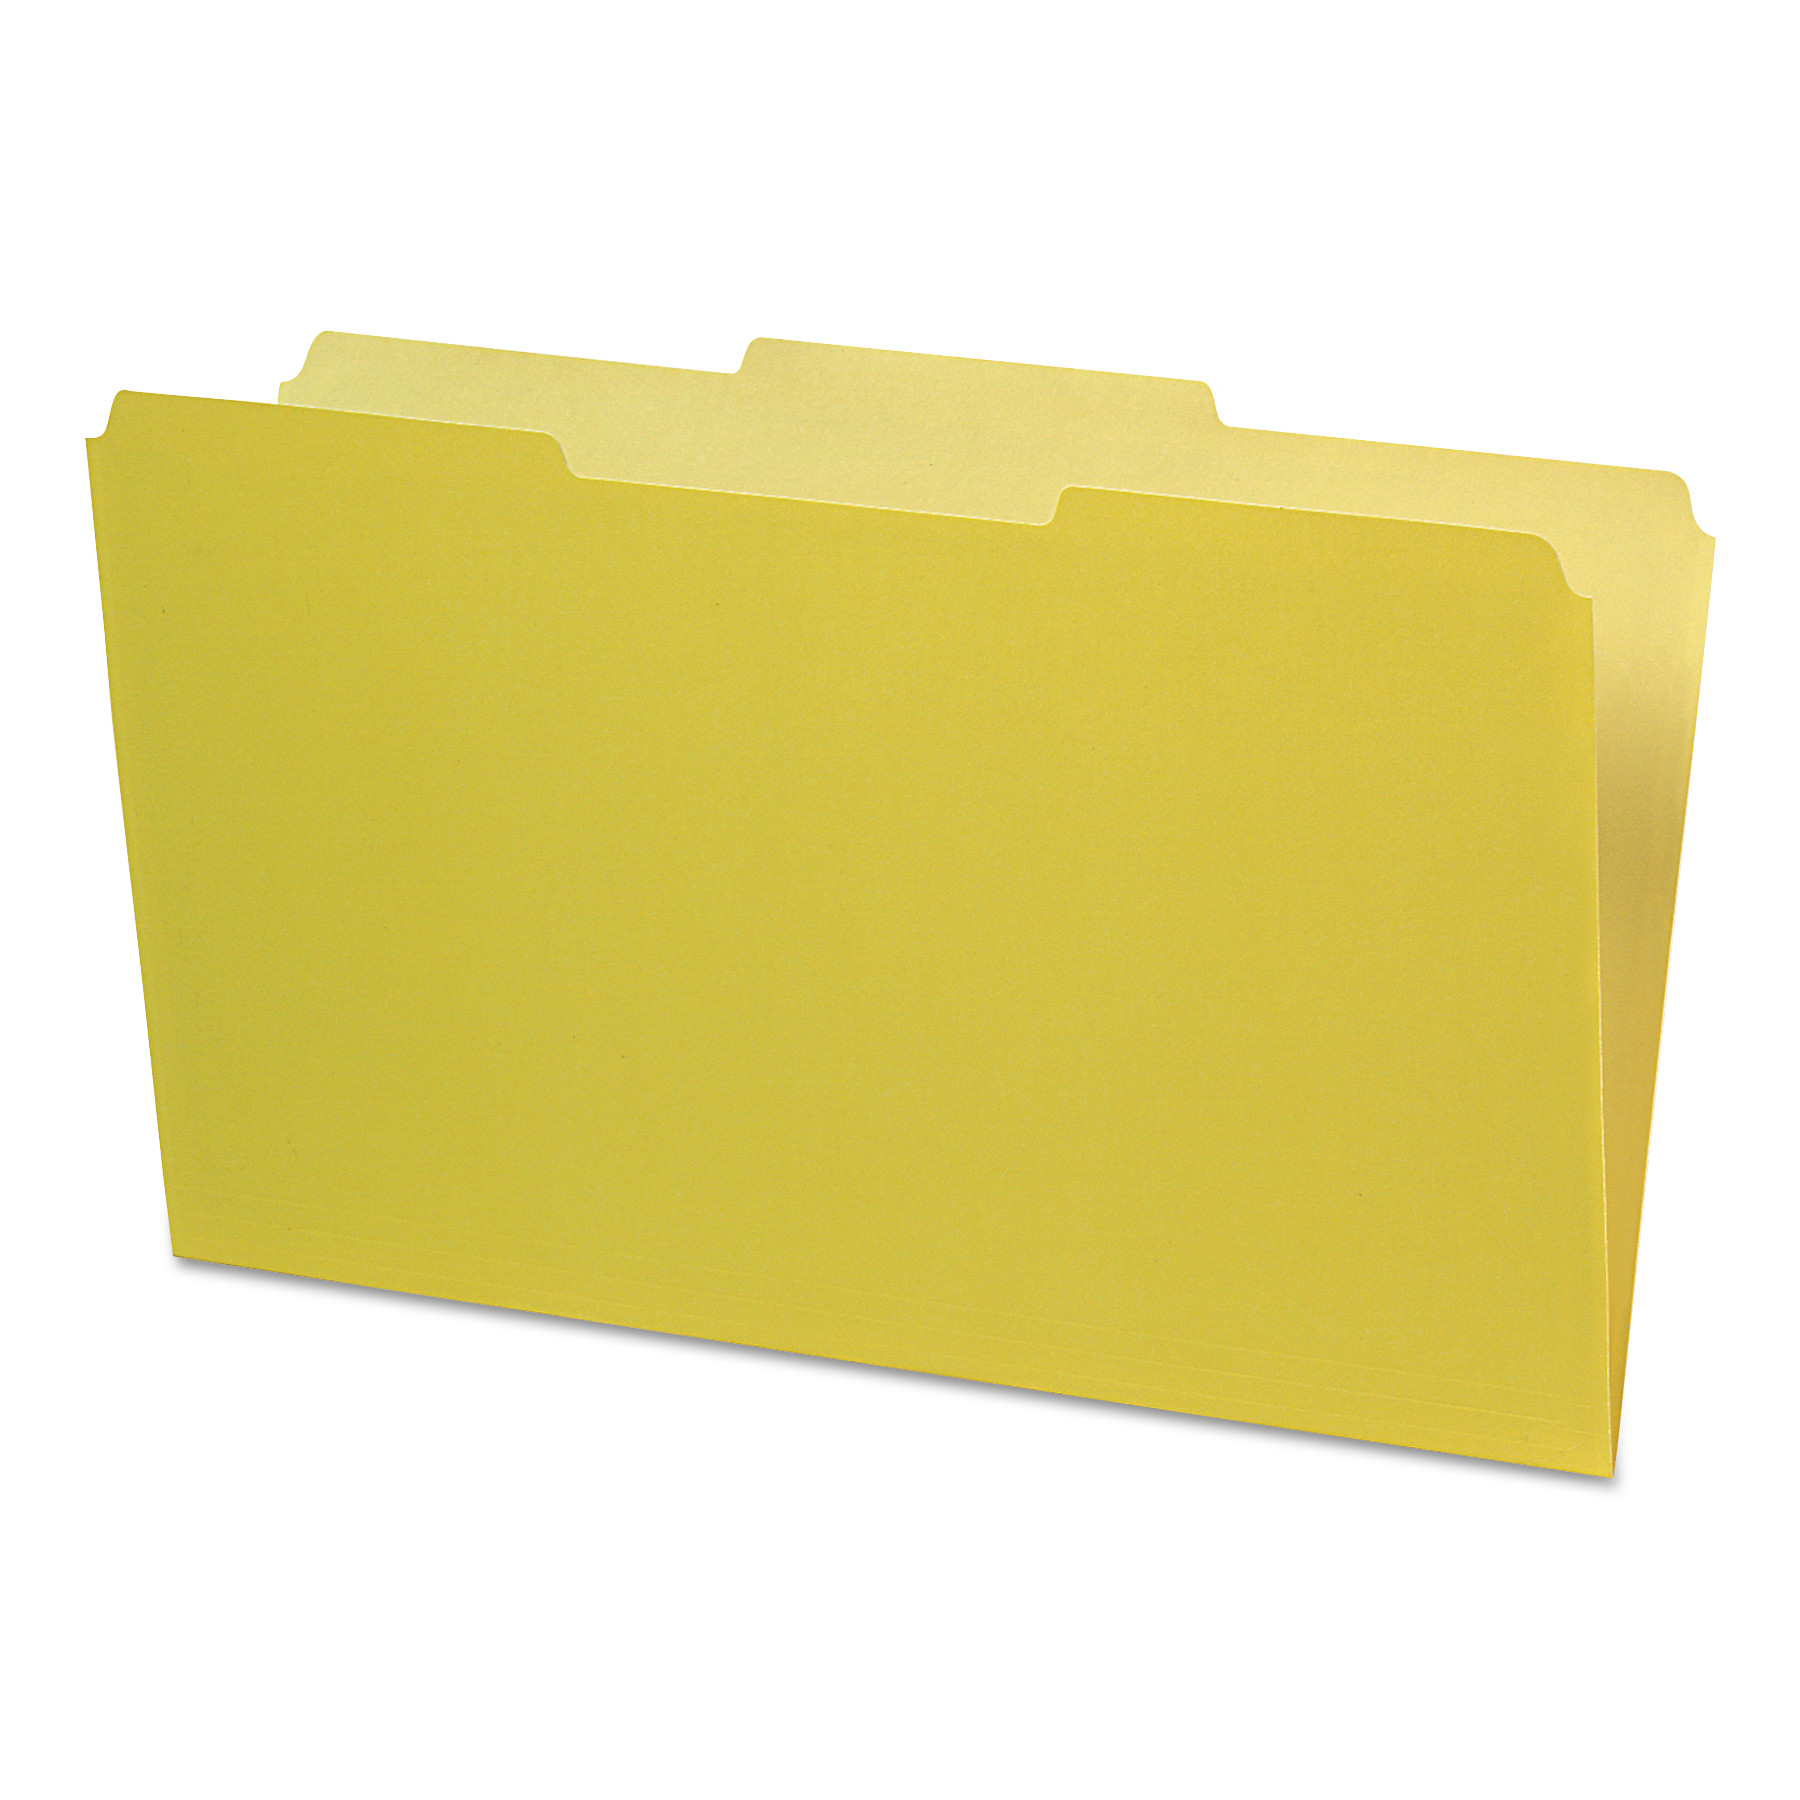  Pendaflex 4350 1/3 YEL Interior File Folders, 1/3-Cut Tabs, Legal Size, Yellow, 100/Box (PFX435013YEL) 